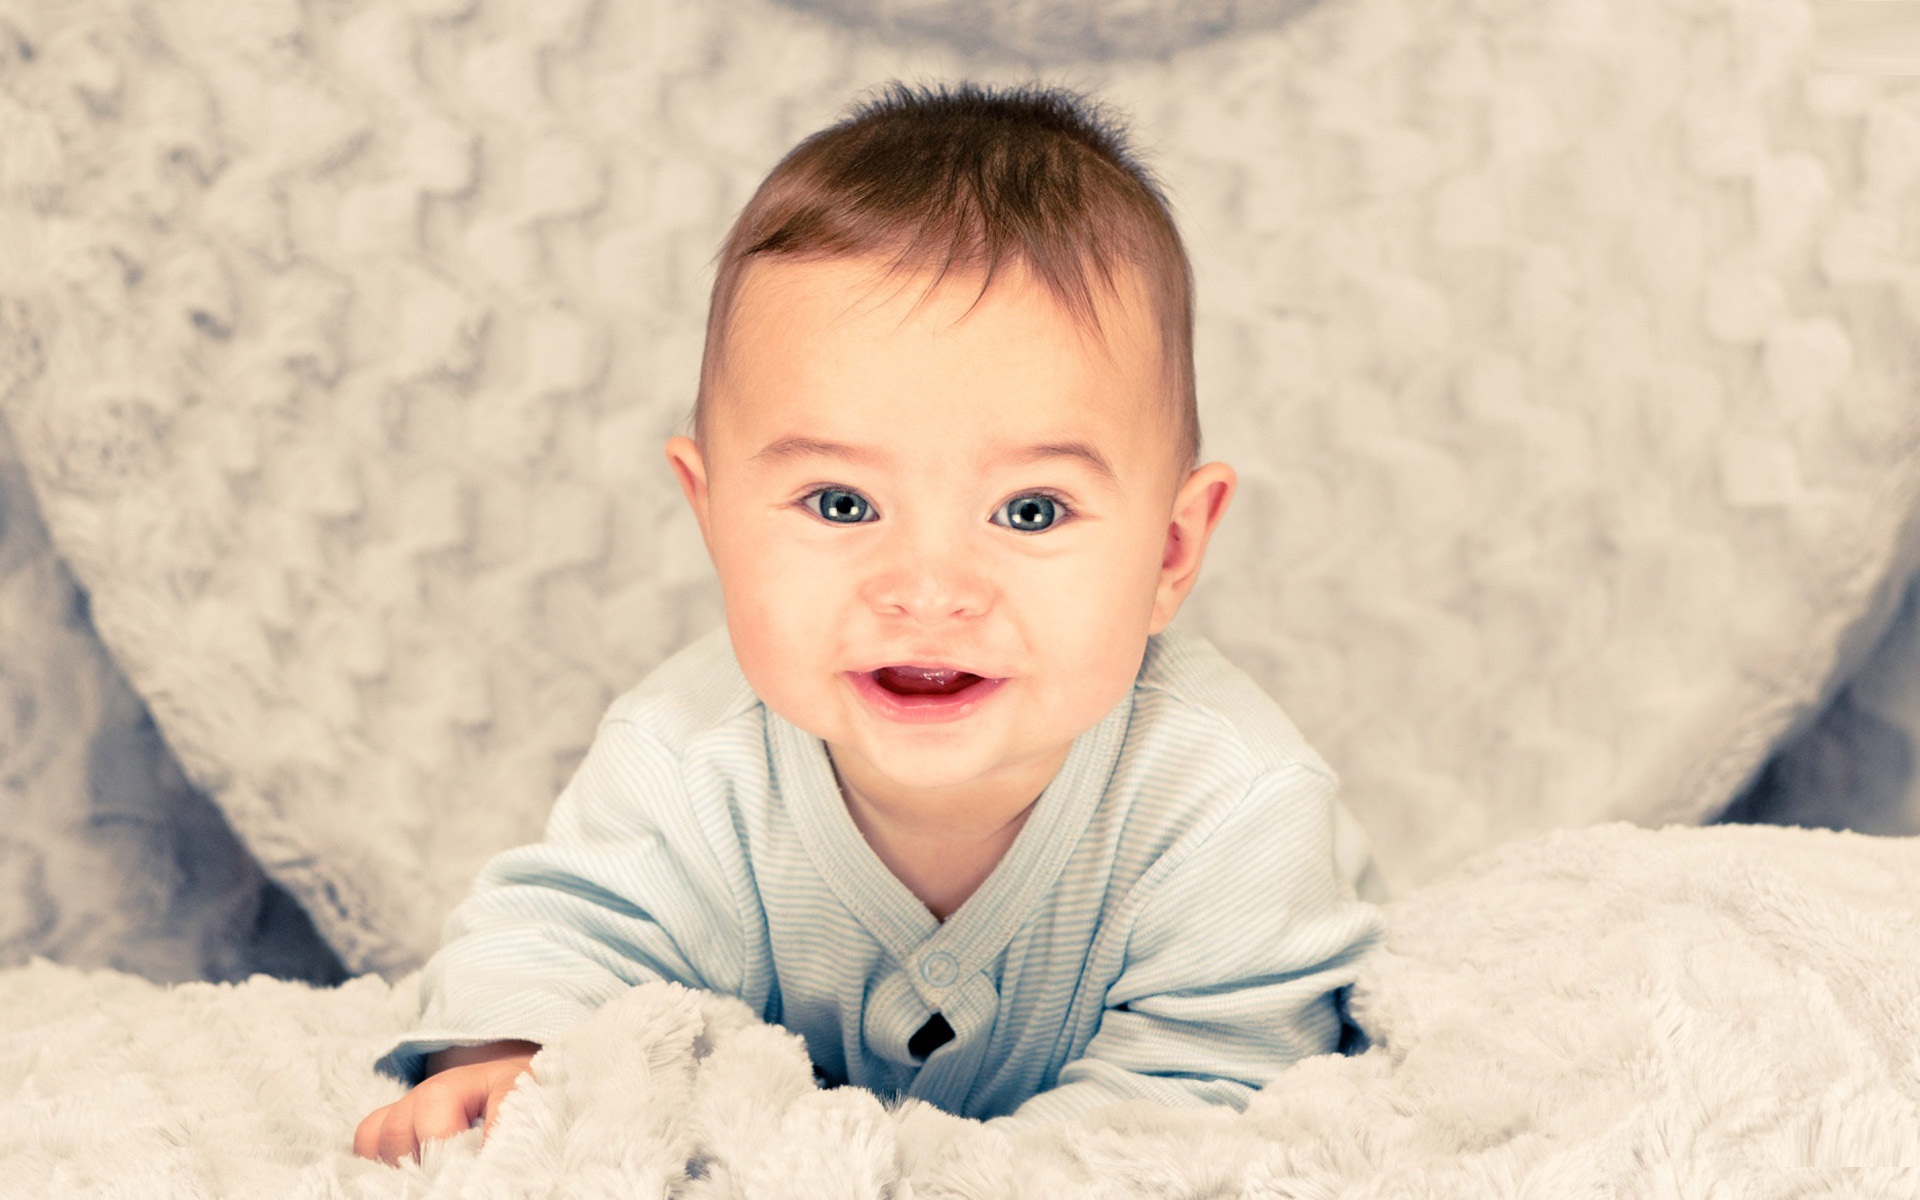 Baby Boy HD Wallpaper | Free HD Wallpapers